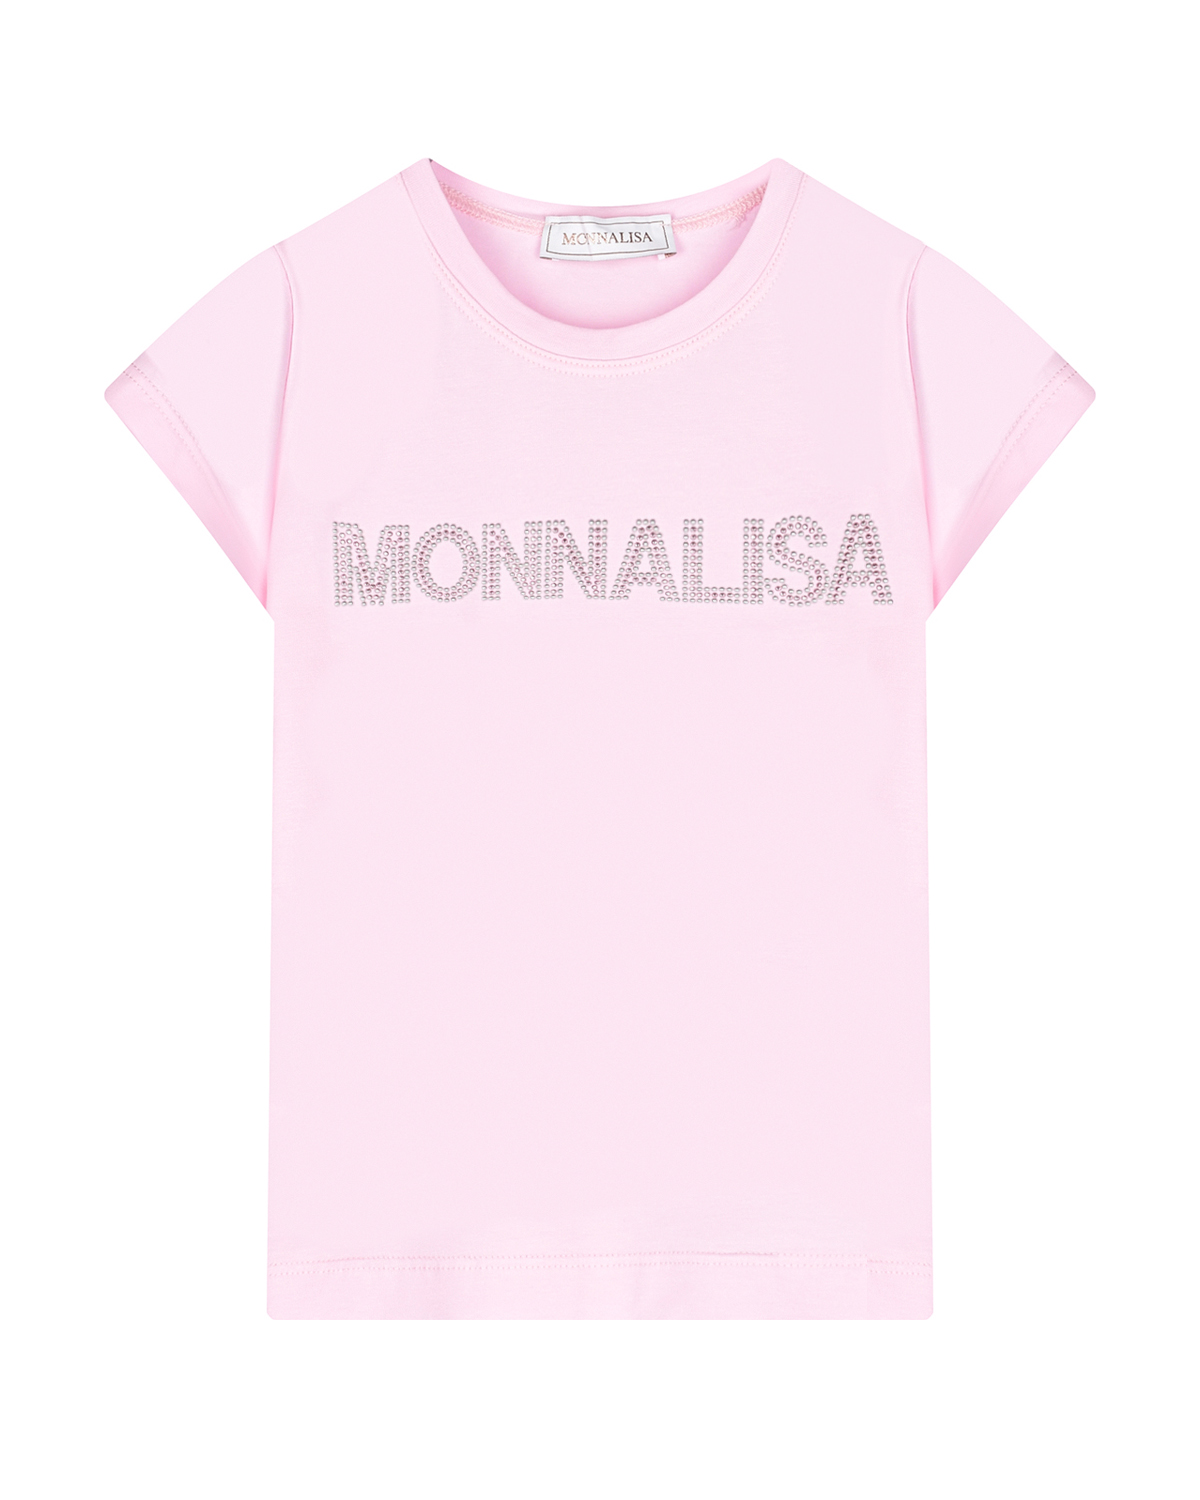 Розовая футболка с лого из стразов Monnalisa розовая трикотажная футболка gulliver 98